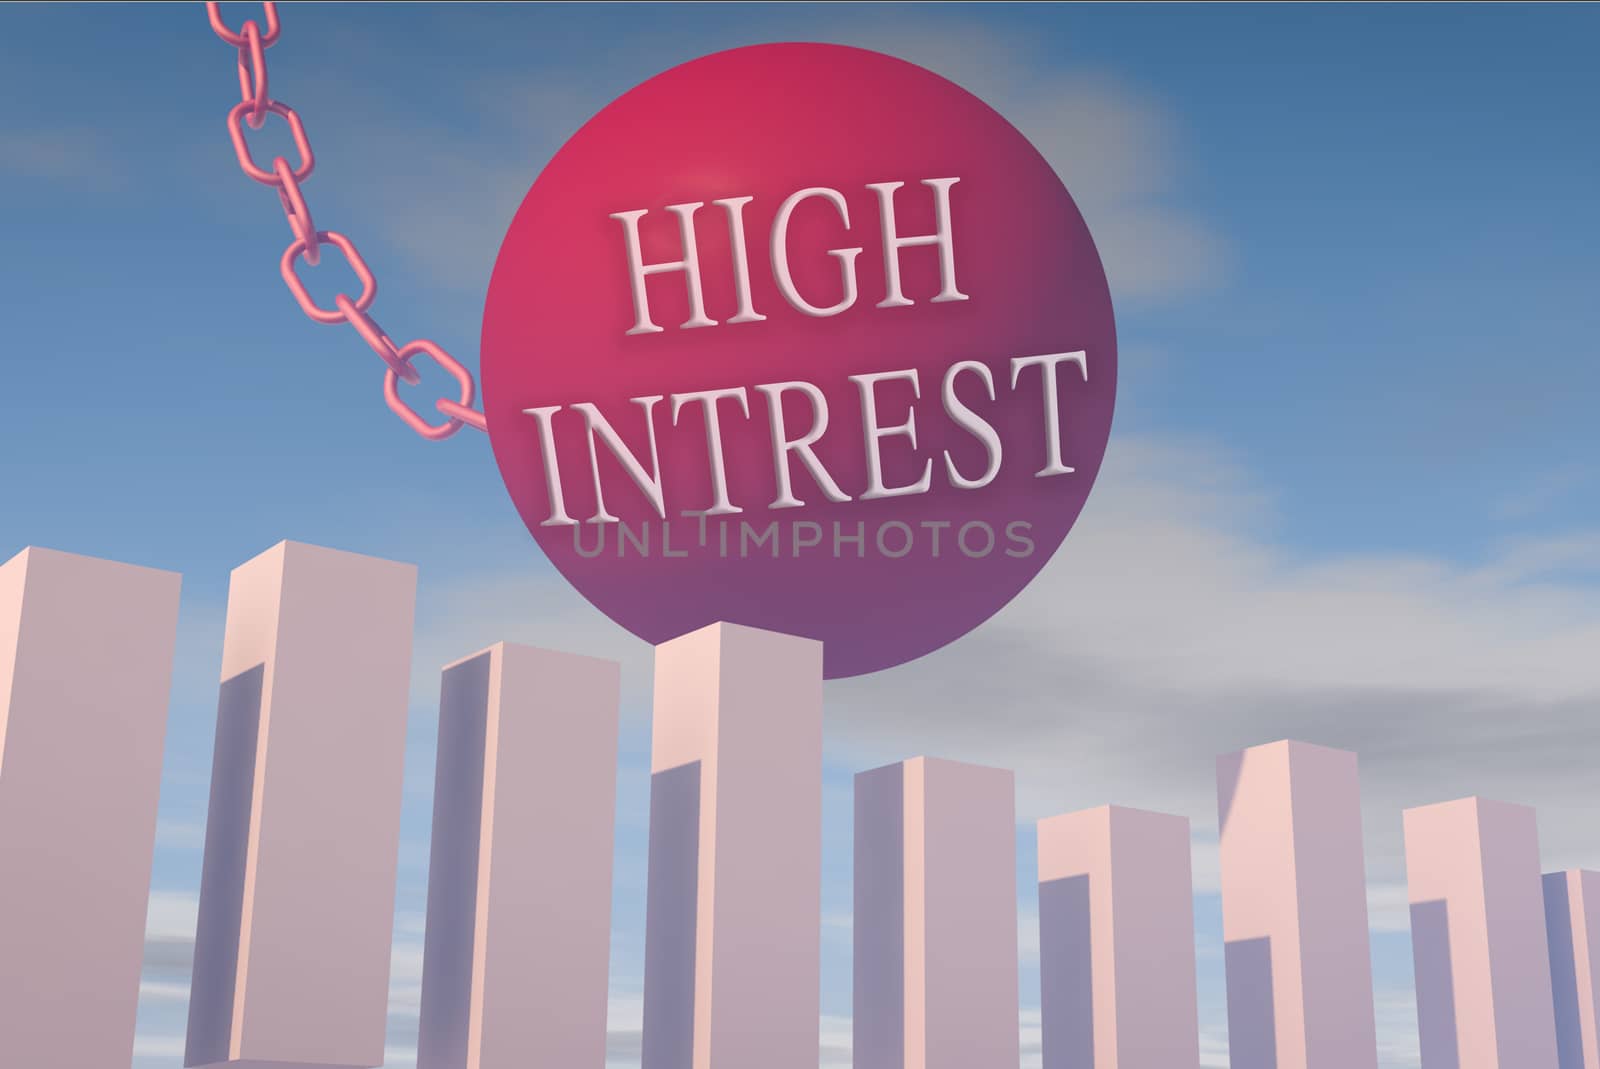 3D render illustration of financial stock market crash risk caused by high interest rate